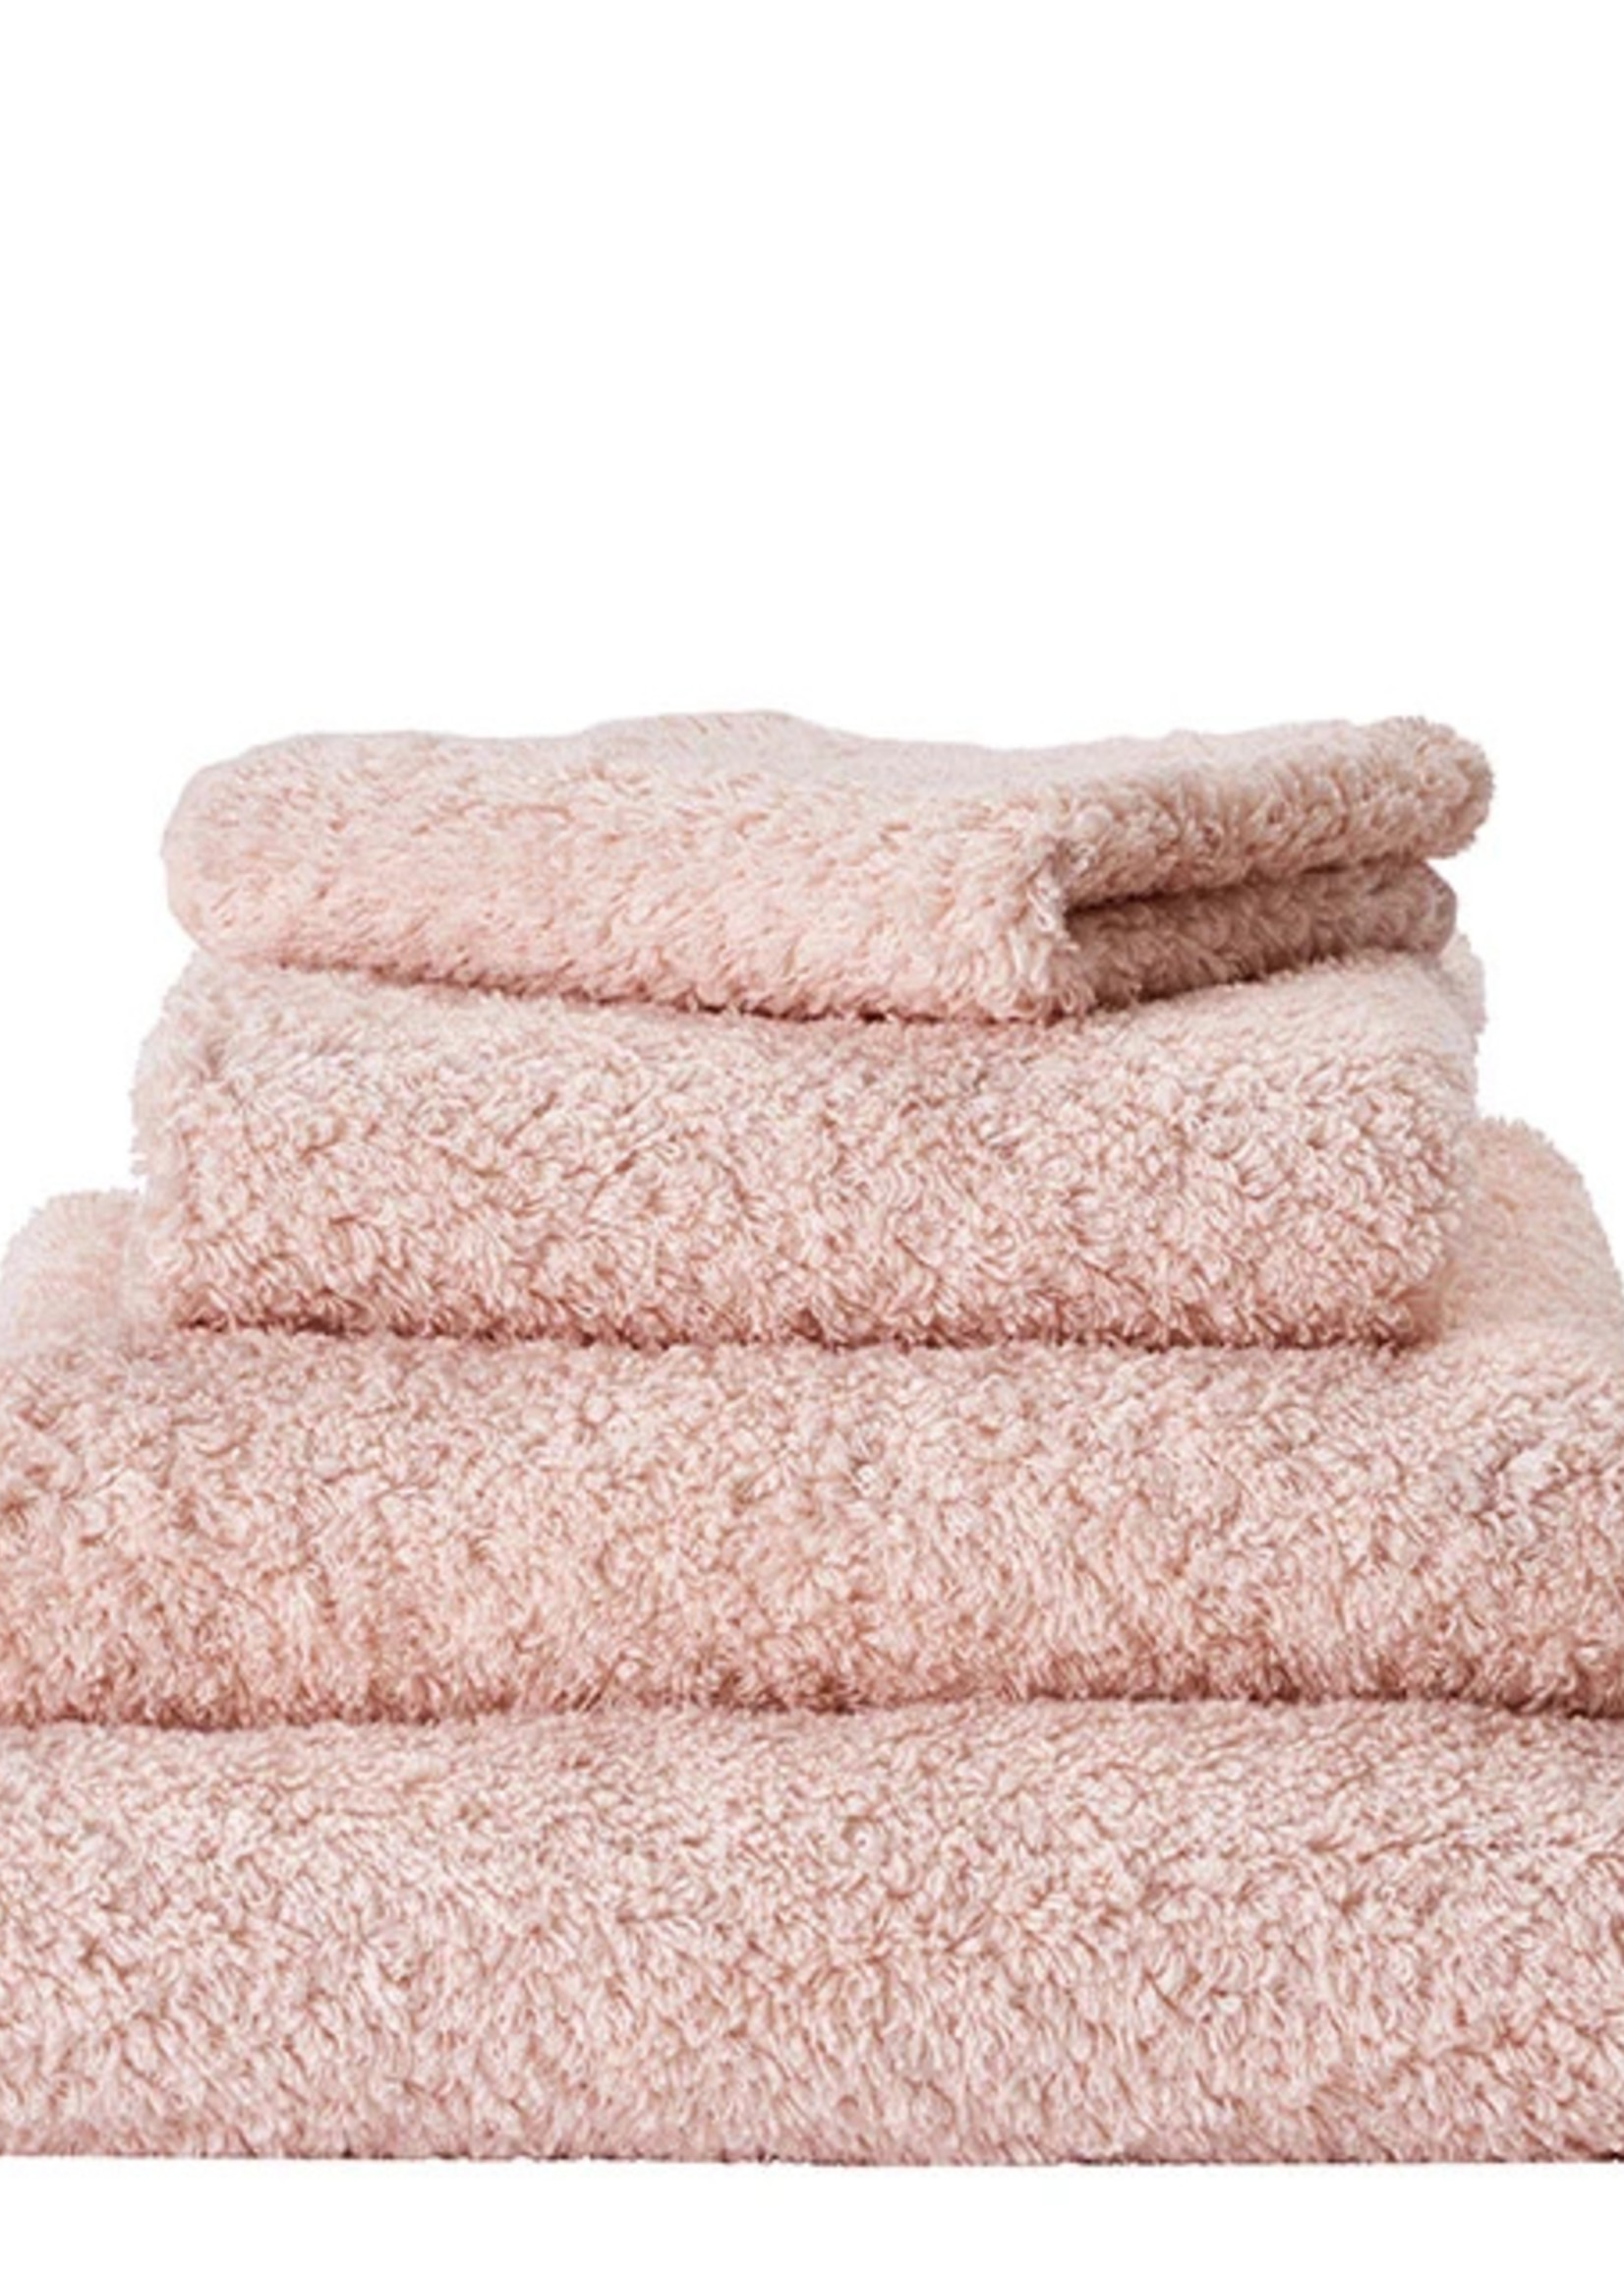 Abyss & Habidecor - Super Pile Egyptian Cotton Towel - 512 Rosewood - Bath Sheet